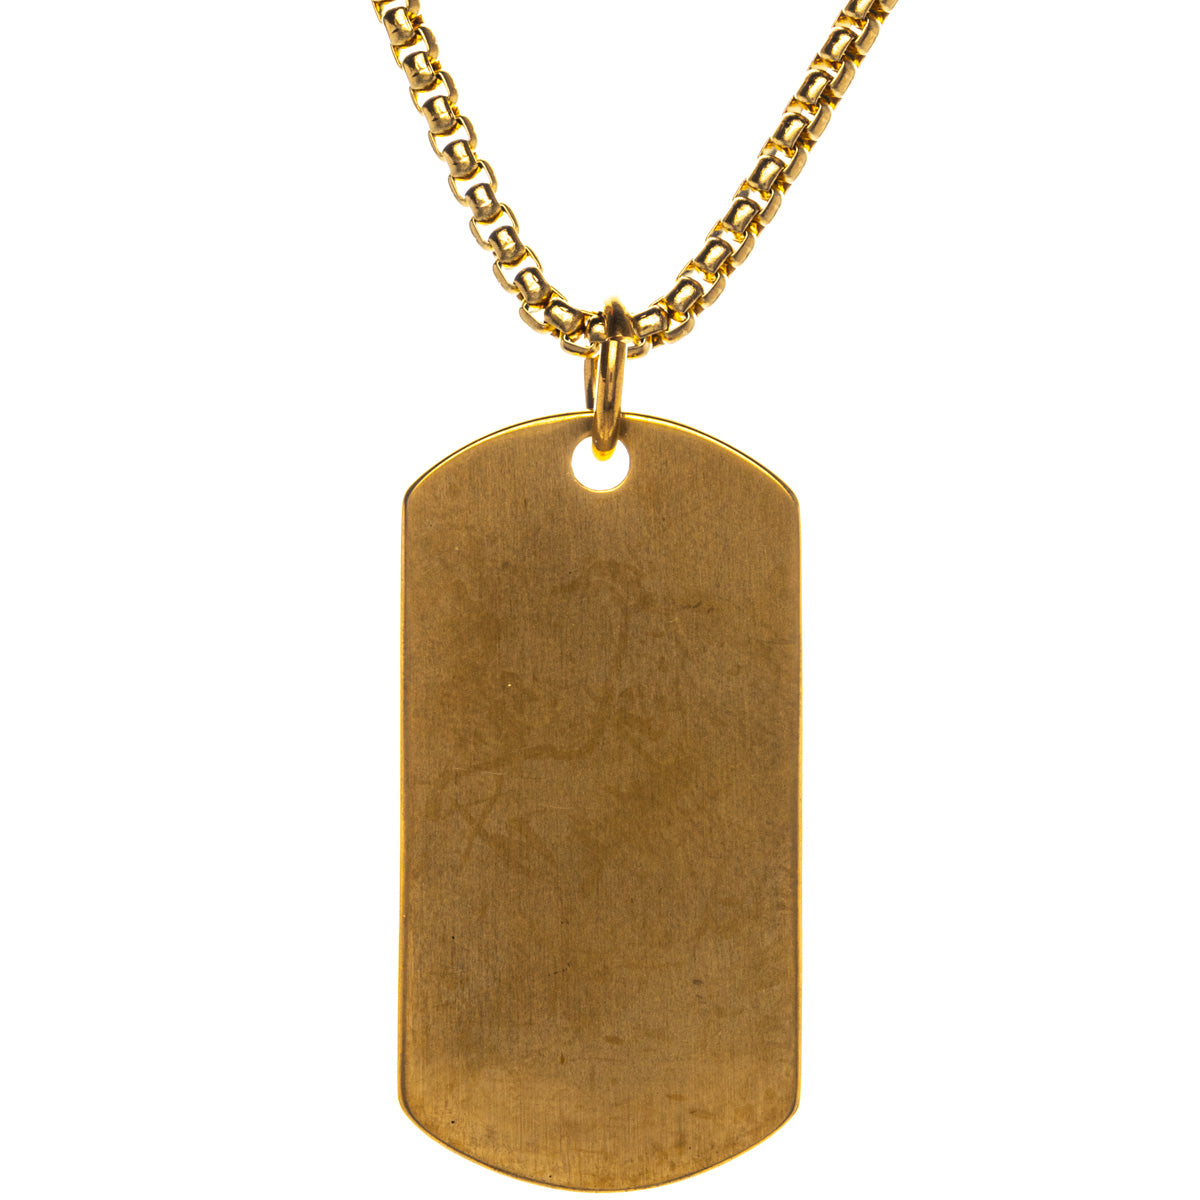 Gold tennis ball pendant pendant necklace (Steel 316L)